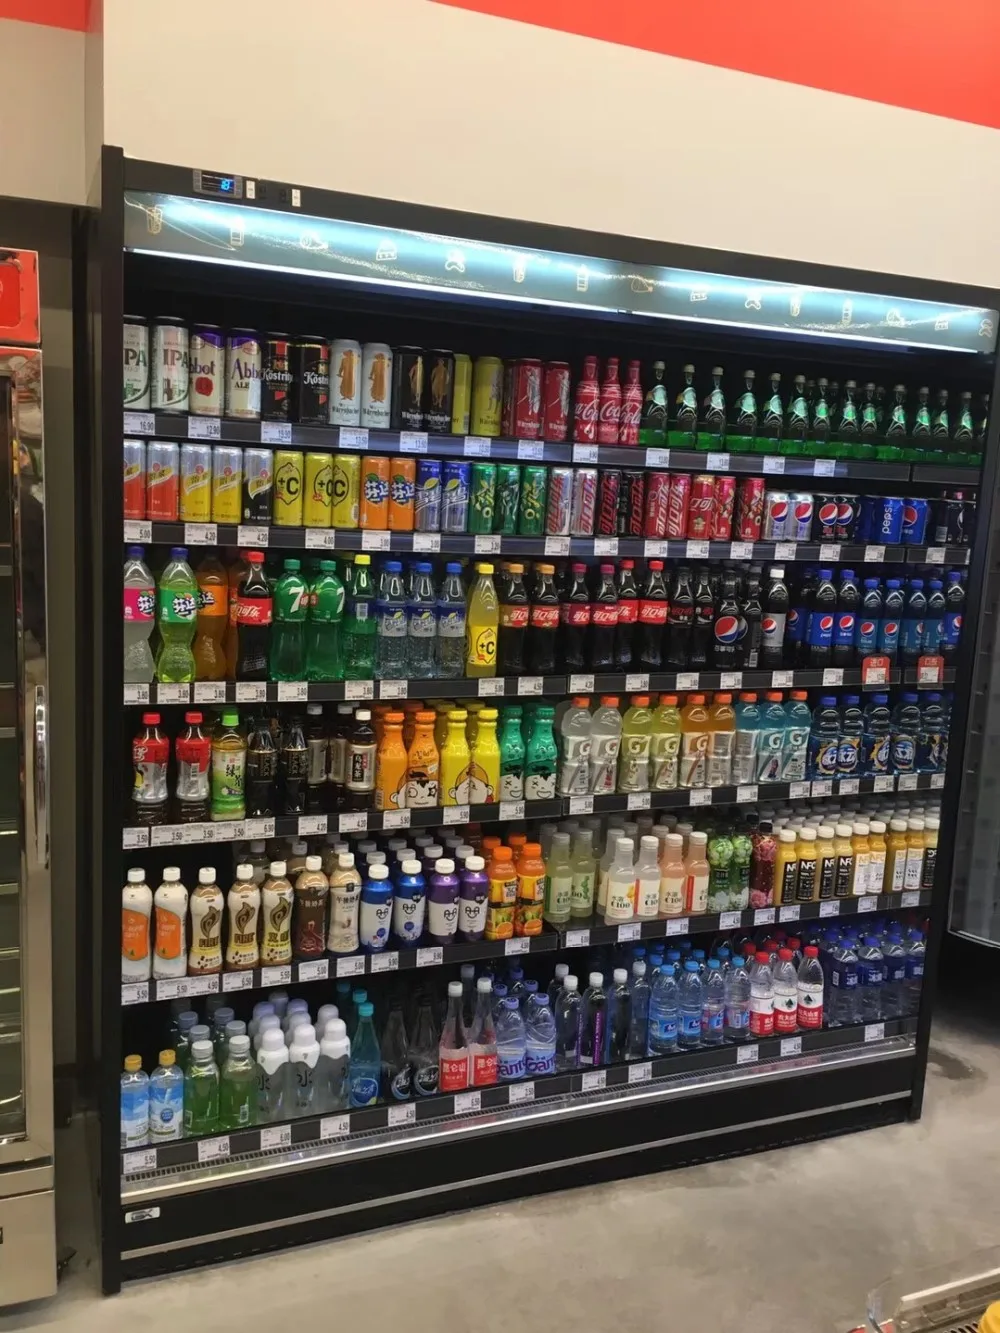 multideck display fridge for sale